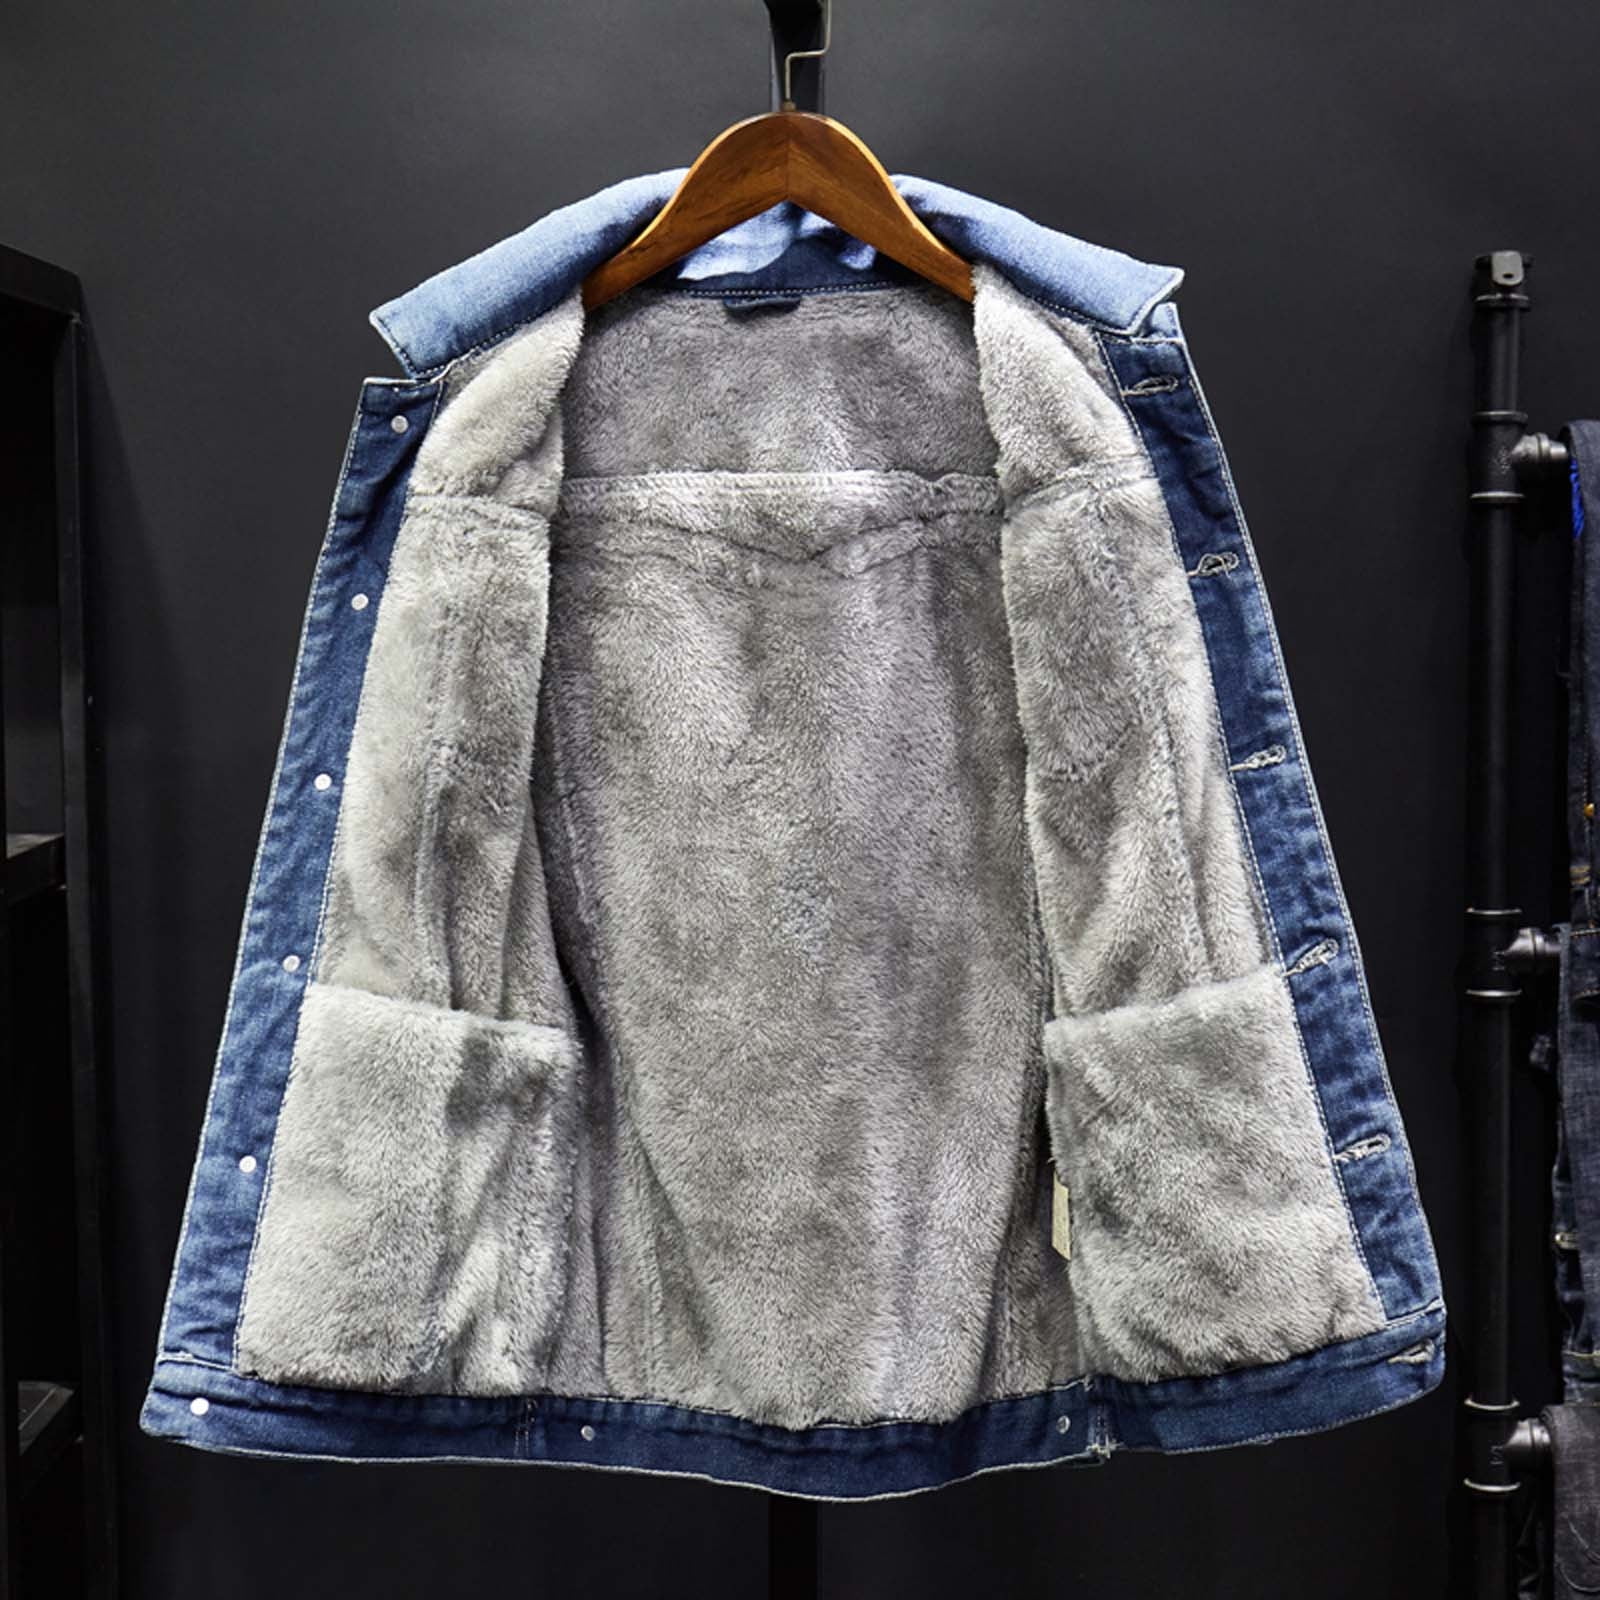 Jean Jacket For Men, Velvet Denim Jacket Lapel Button Double Breast Pocket  Long Sleeve Trucker Jacket 